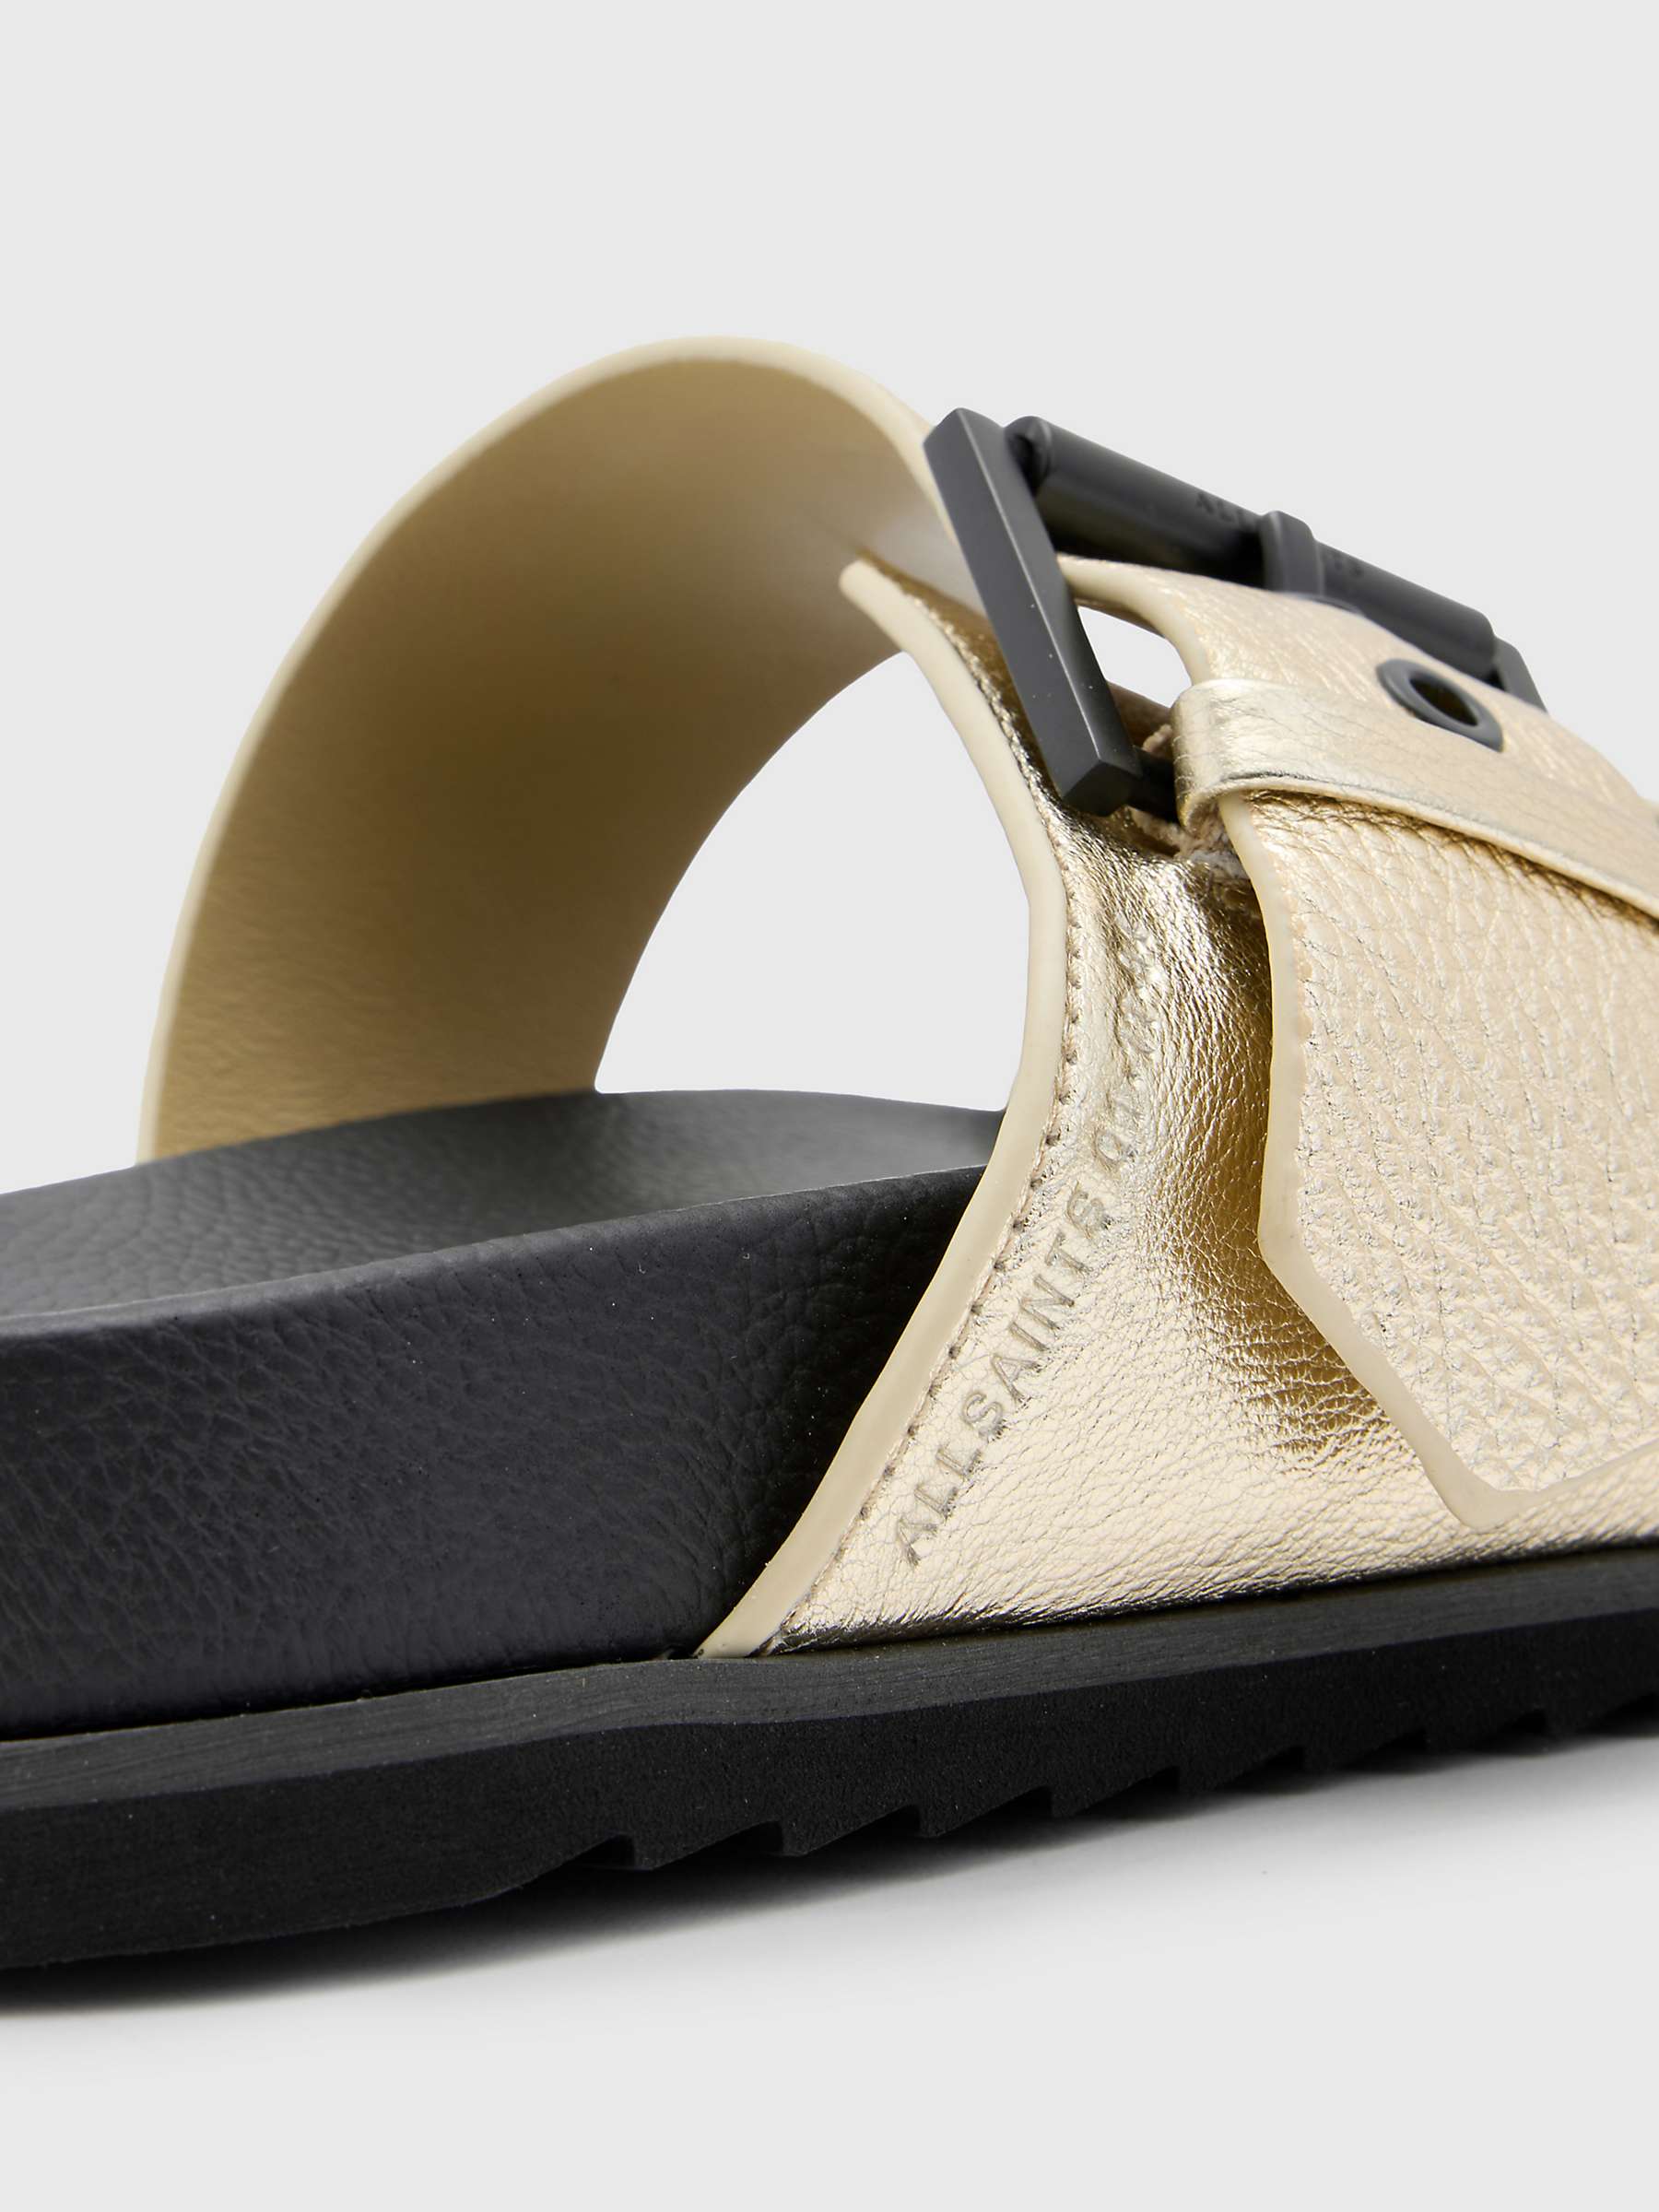 Buy AllSaints Sian Footbed Sandals Online at johnlewis.com